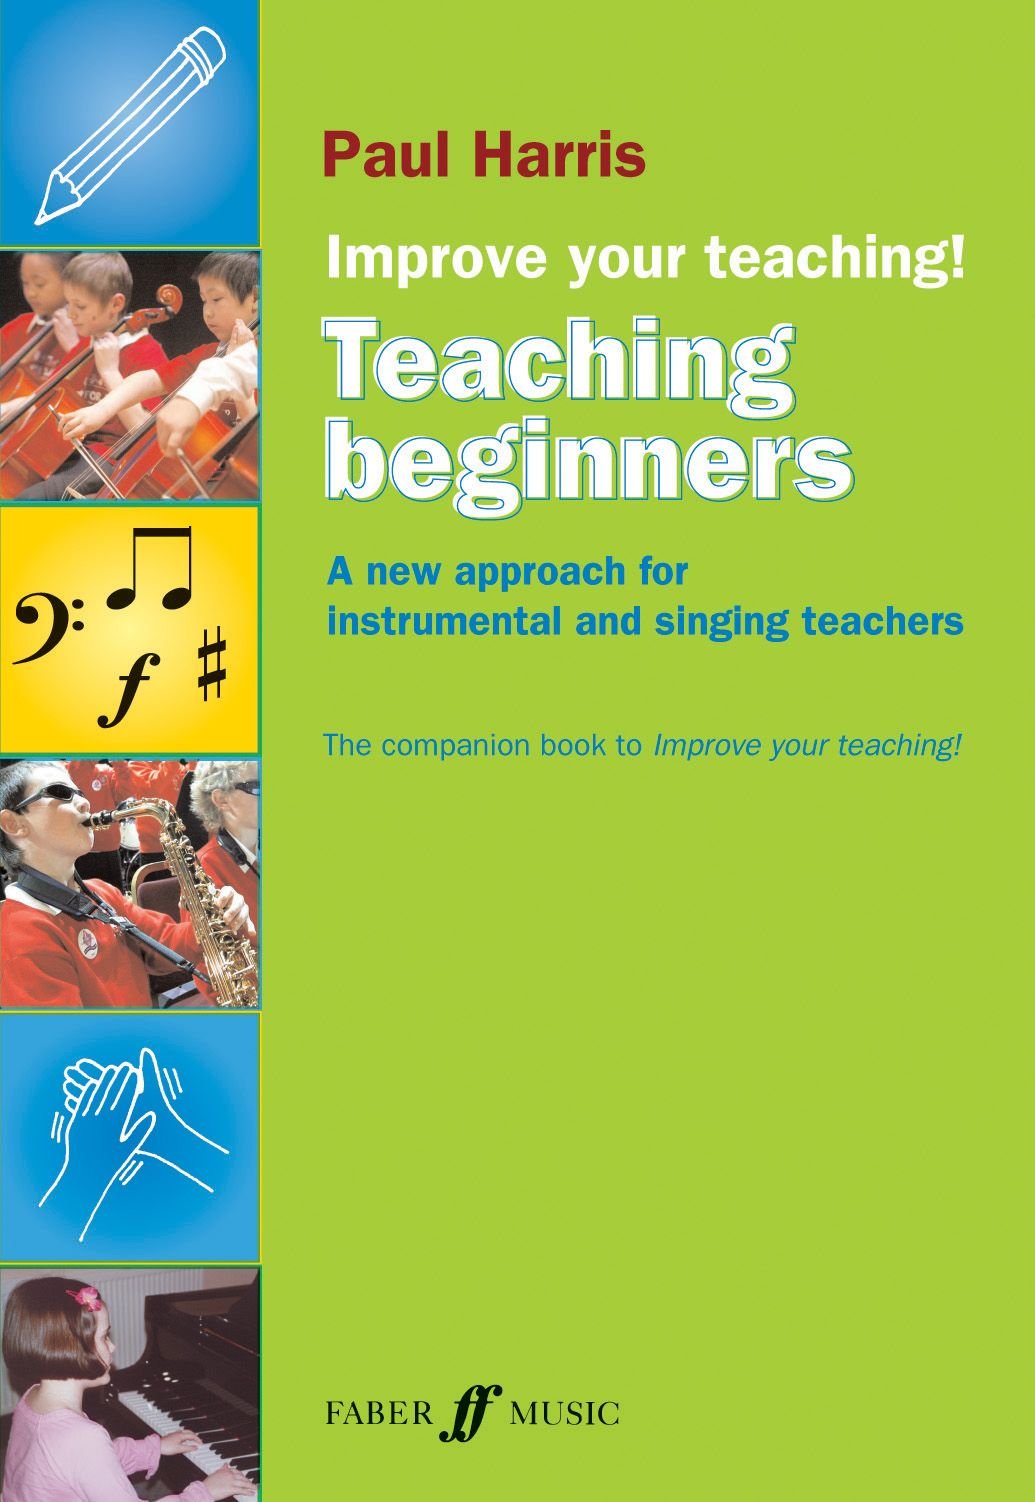 Improve your teaching! Teaching Beginners